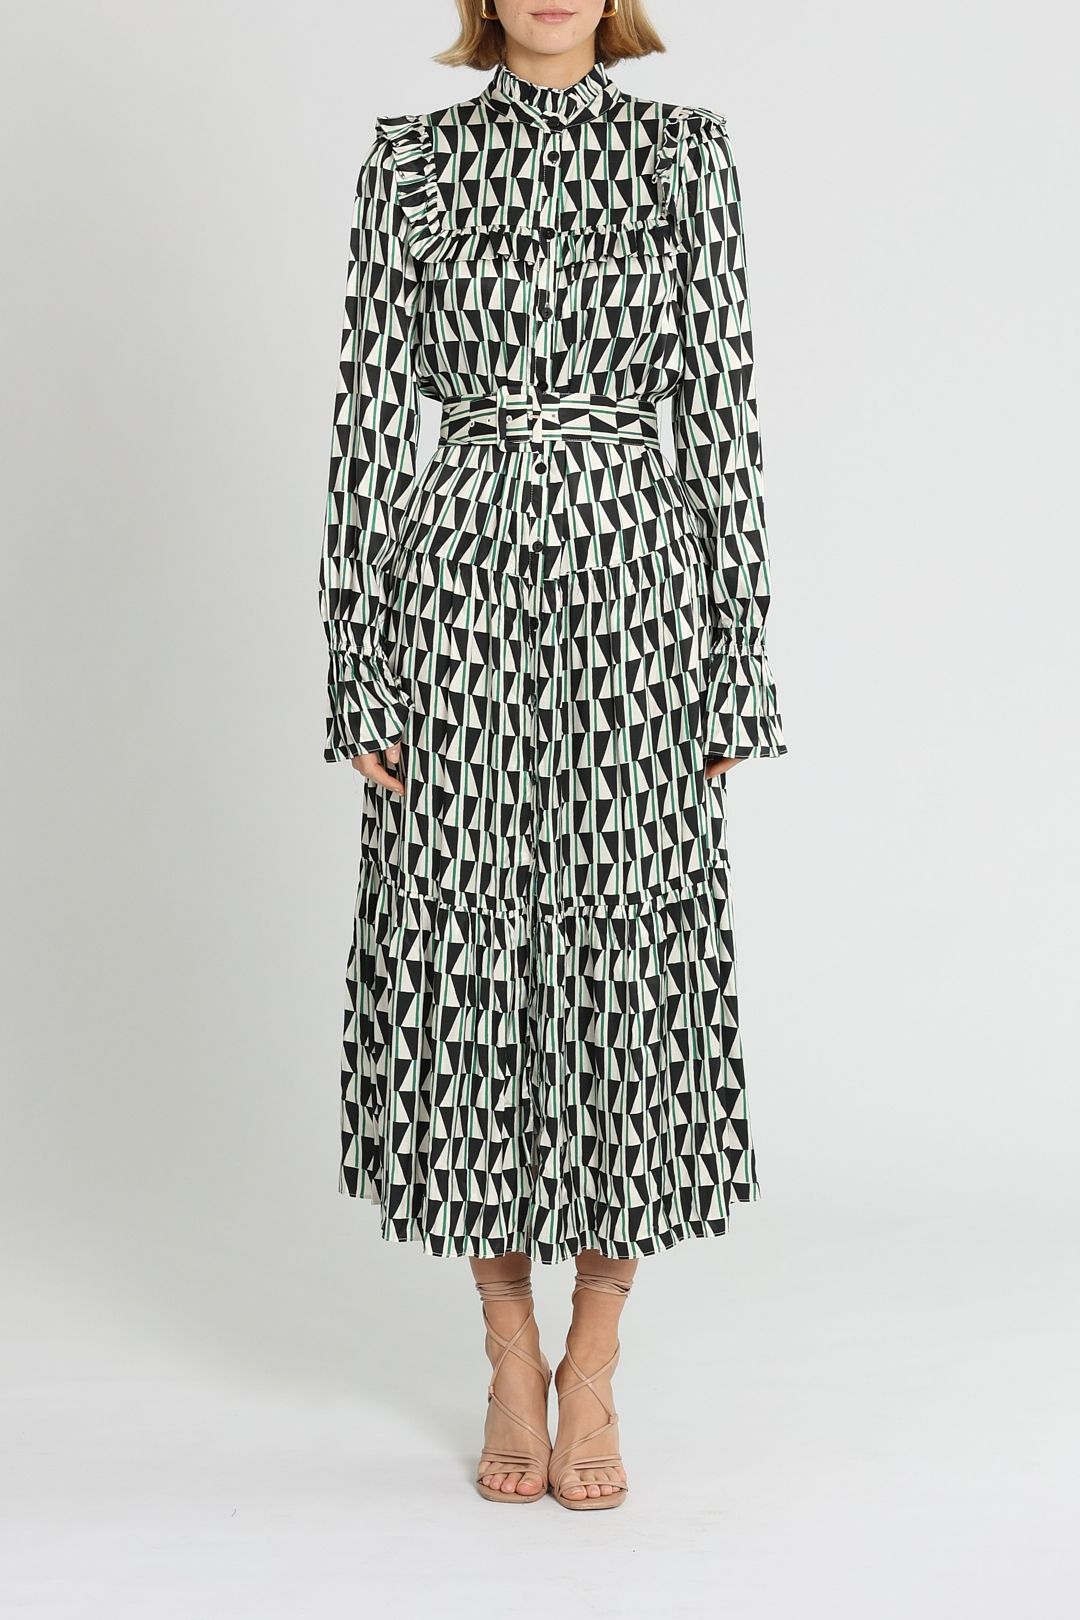 Kitri Mandy Green Tile Print Maxi Dress